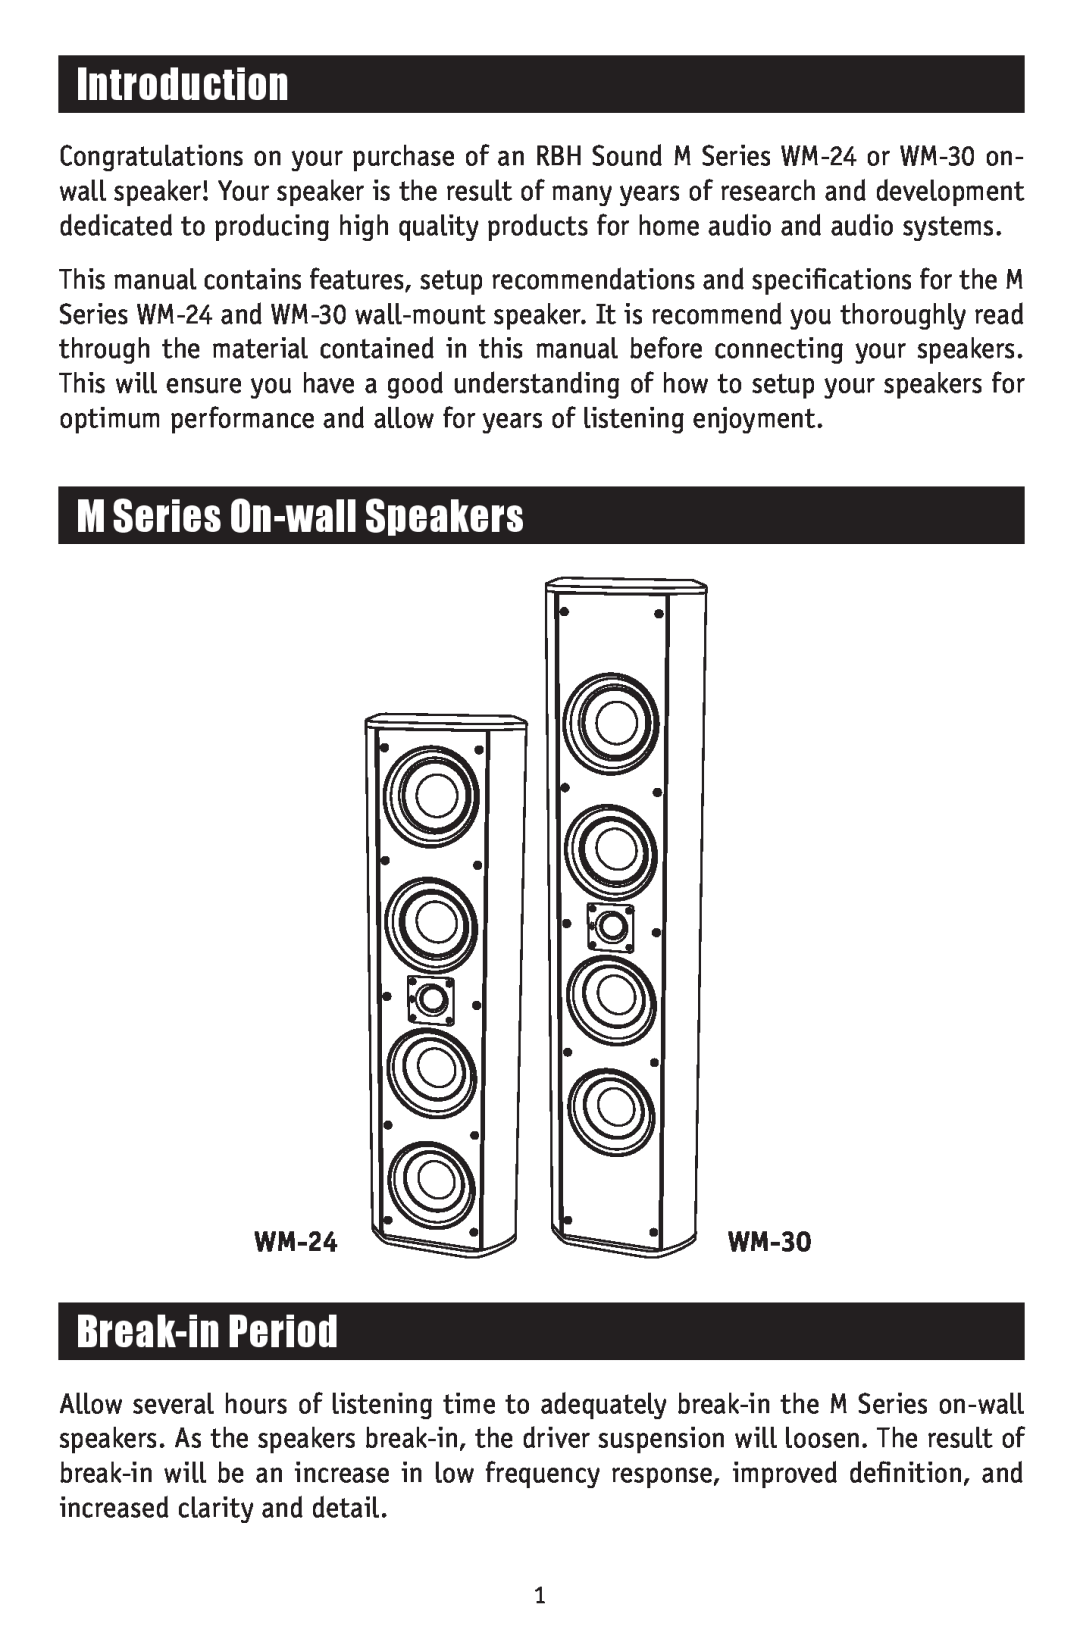 RBH Sound WM-30 owner manual Introduction, M Series On-wallSpeakers, Break-inPeriod, WM-24 